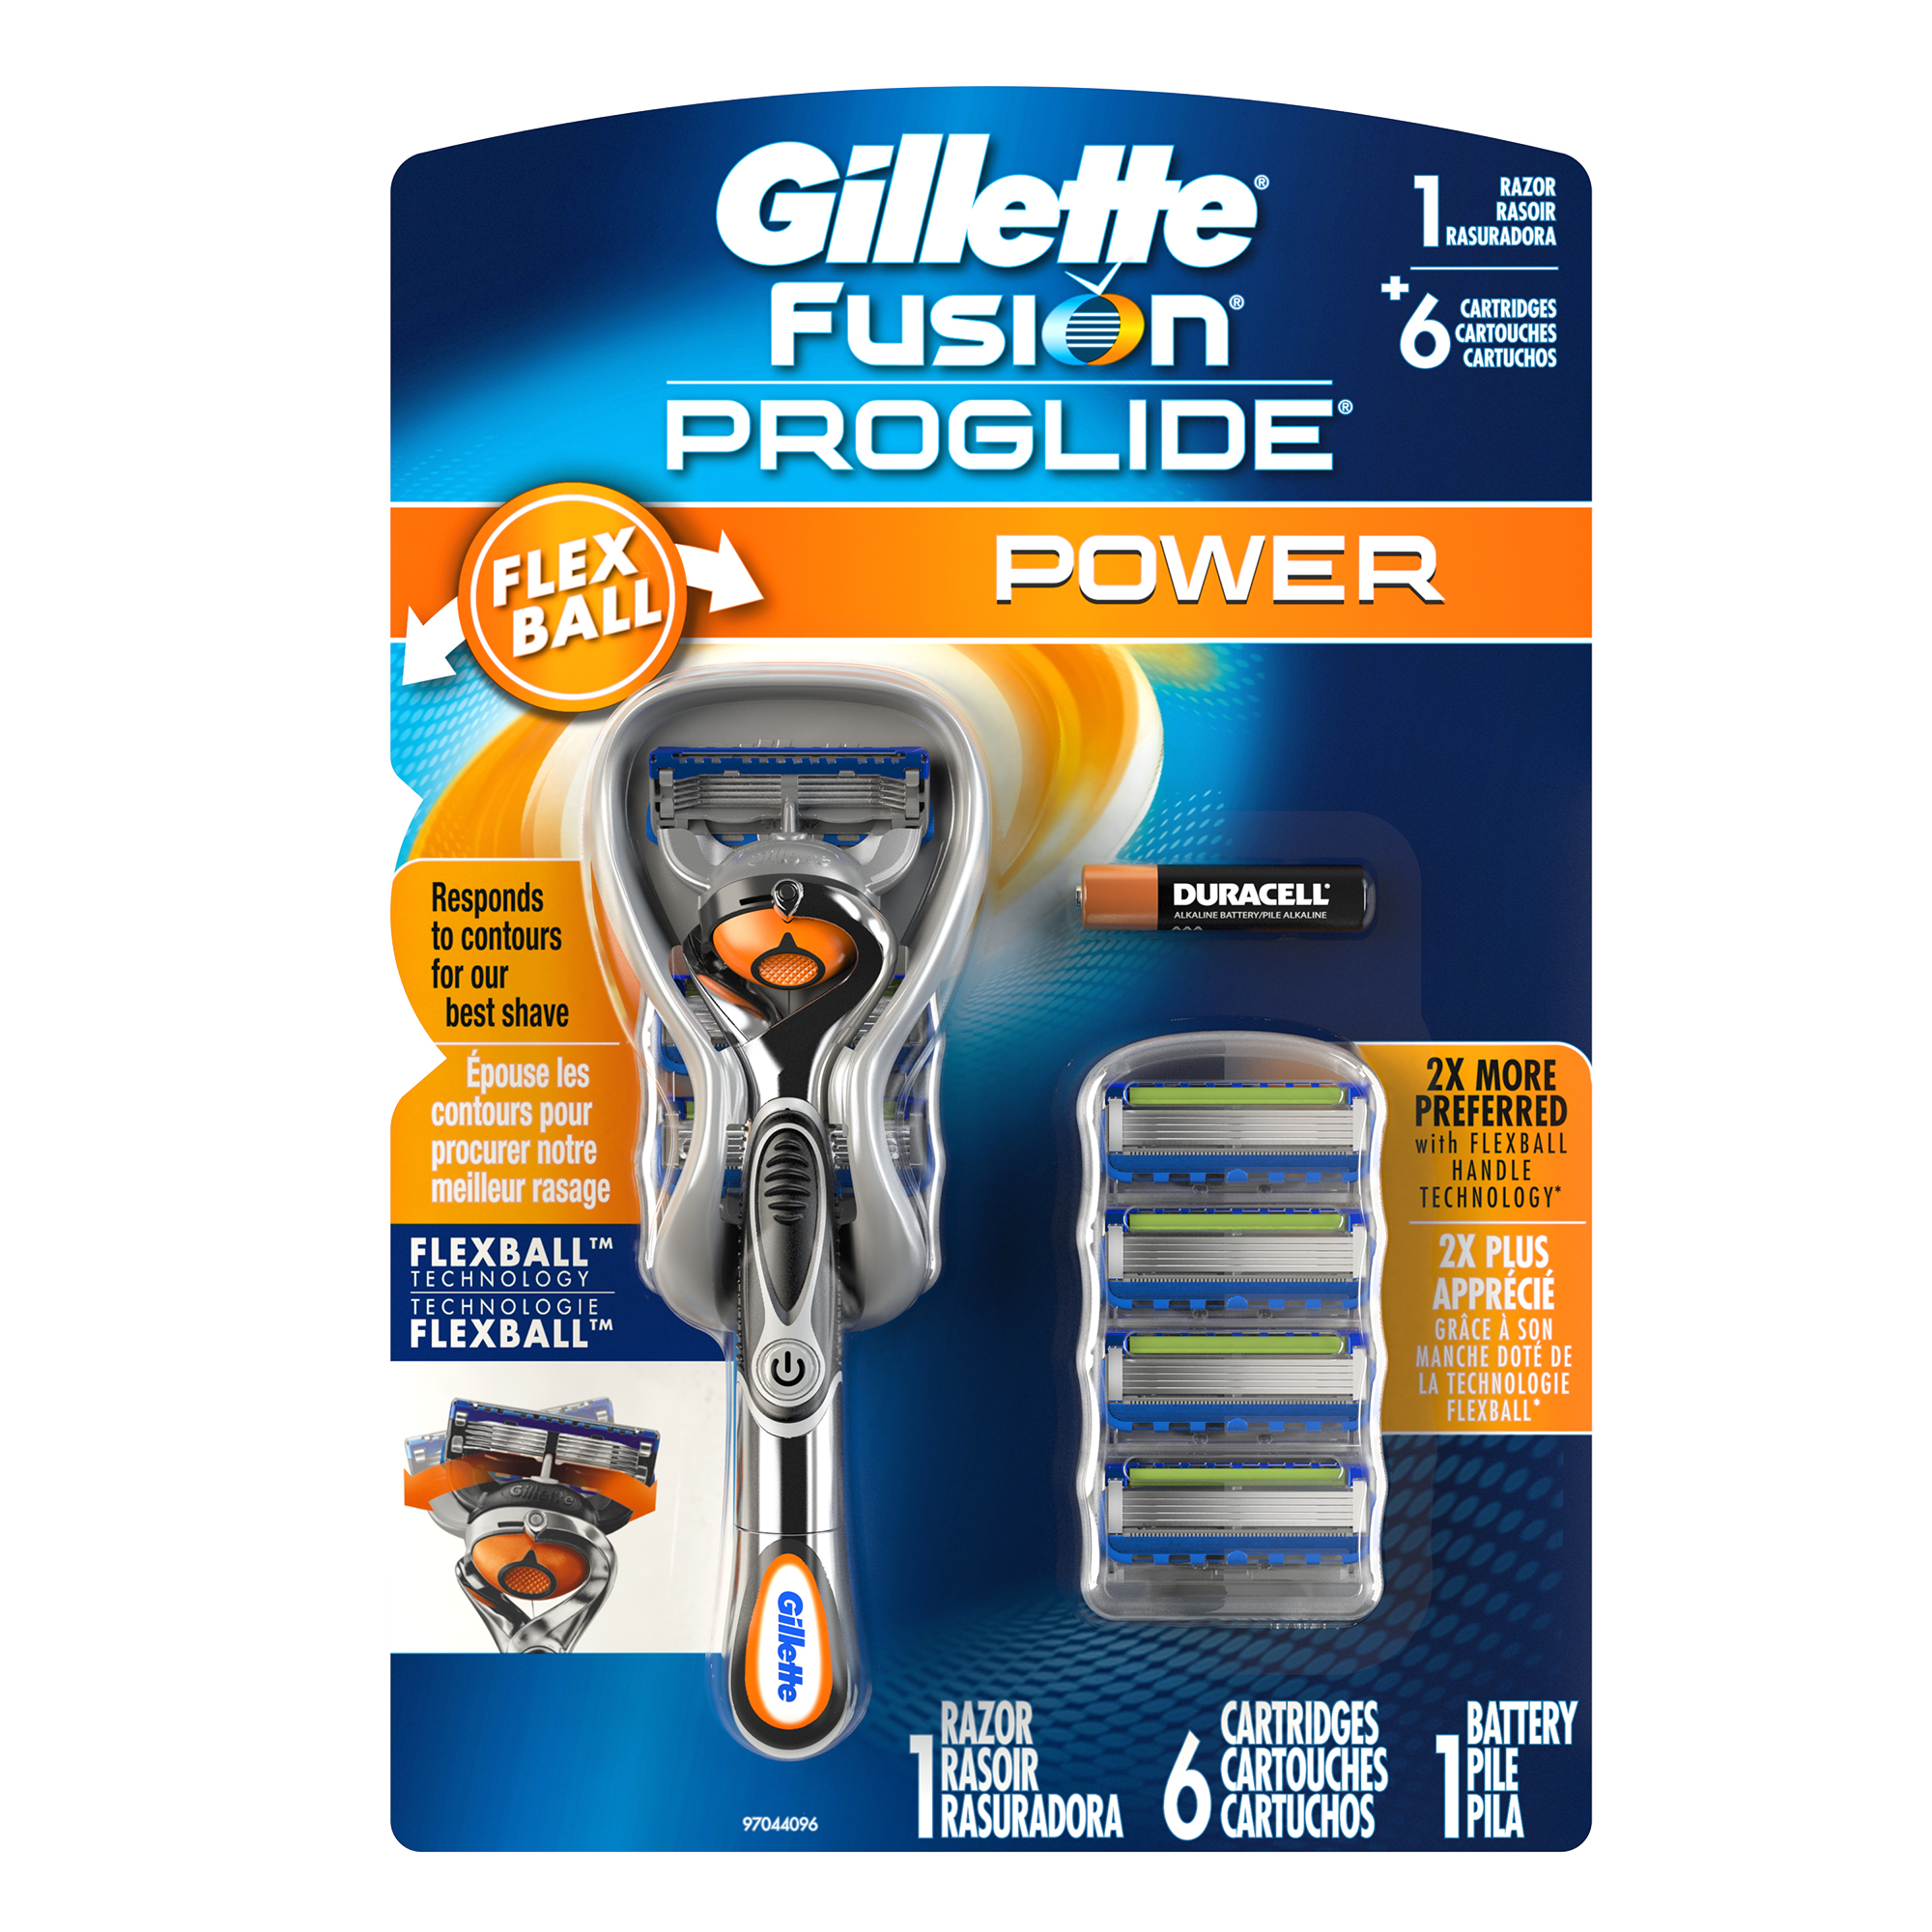 Gillette Fusion ProGlide Power Men's Razor with FlexBall Handle Technology, 6 Razors Blades, 1 Kit - image 1 of 7